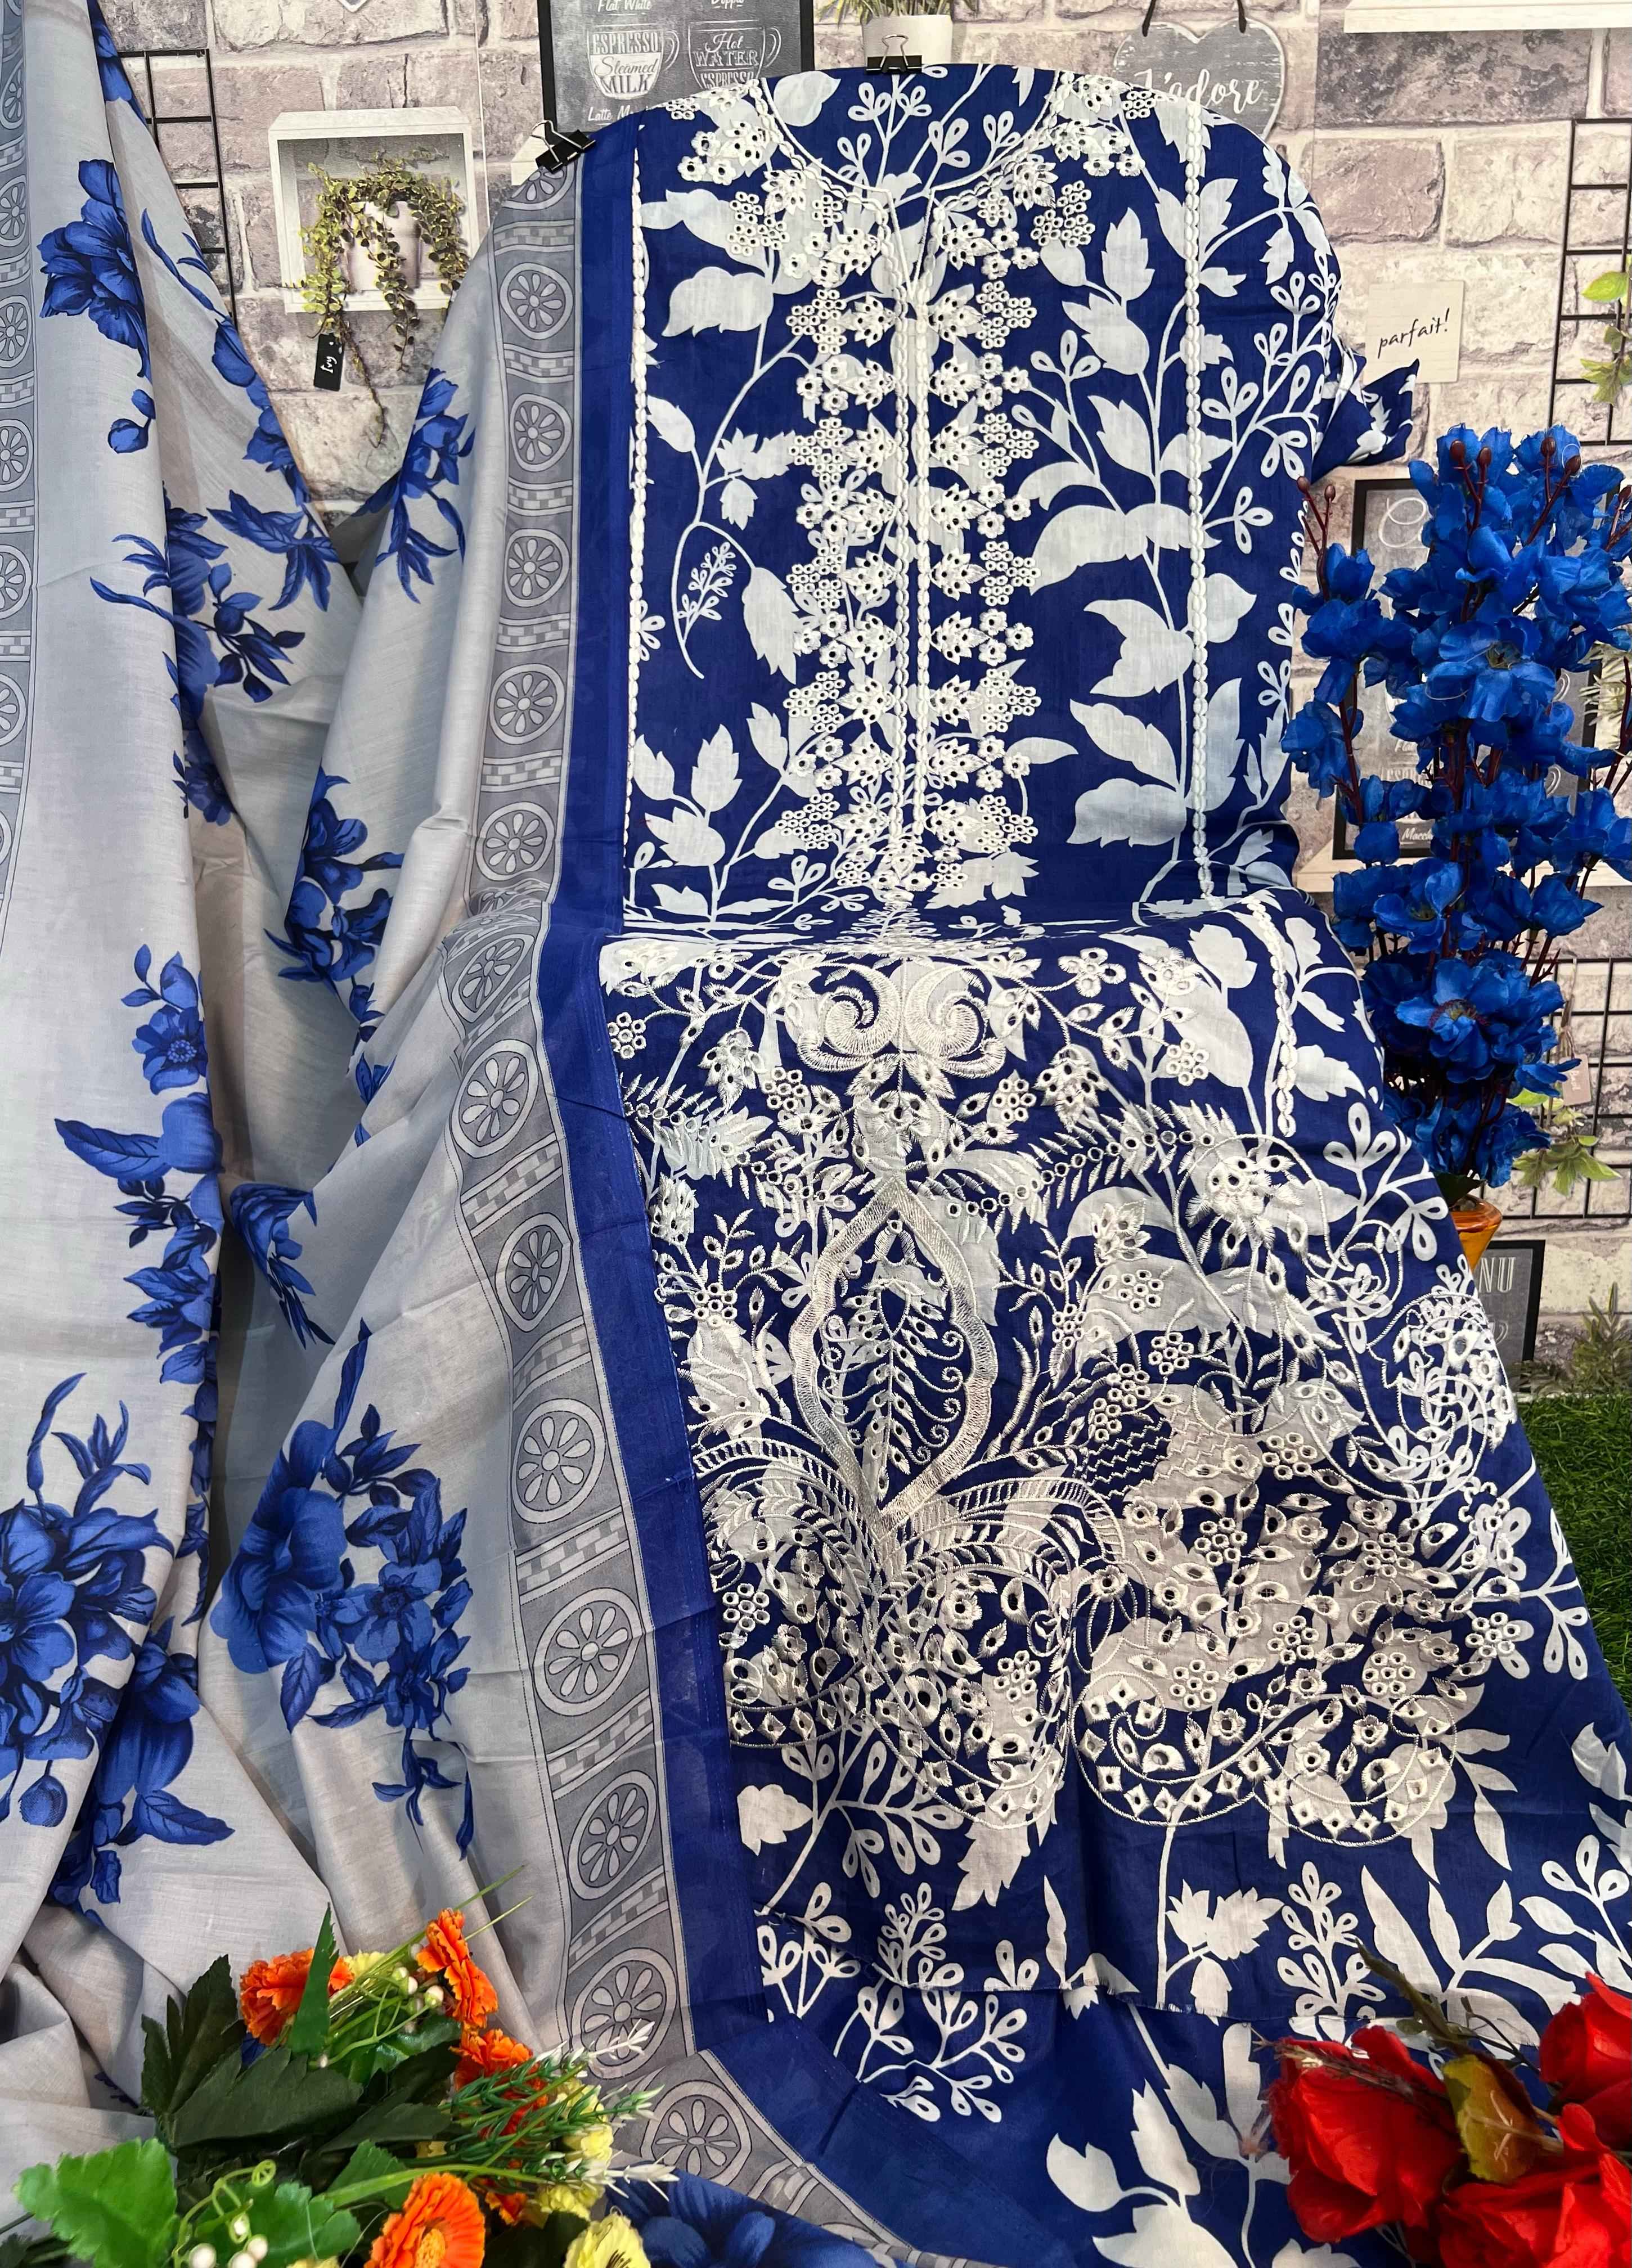 Hazzel Charizma Luxury Lawn Cotton Dress Material (6 Pc Catalog)